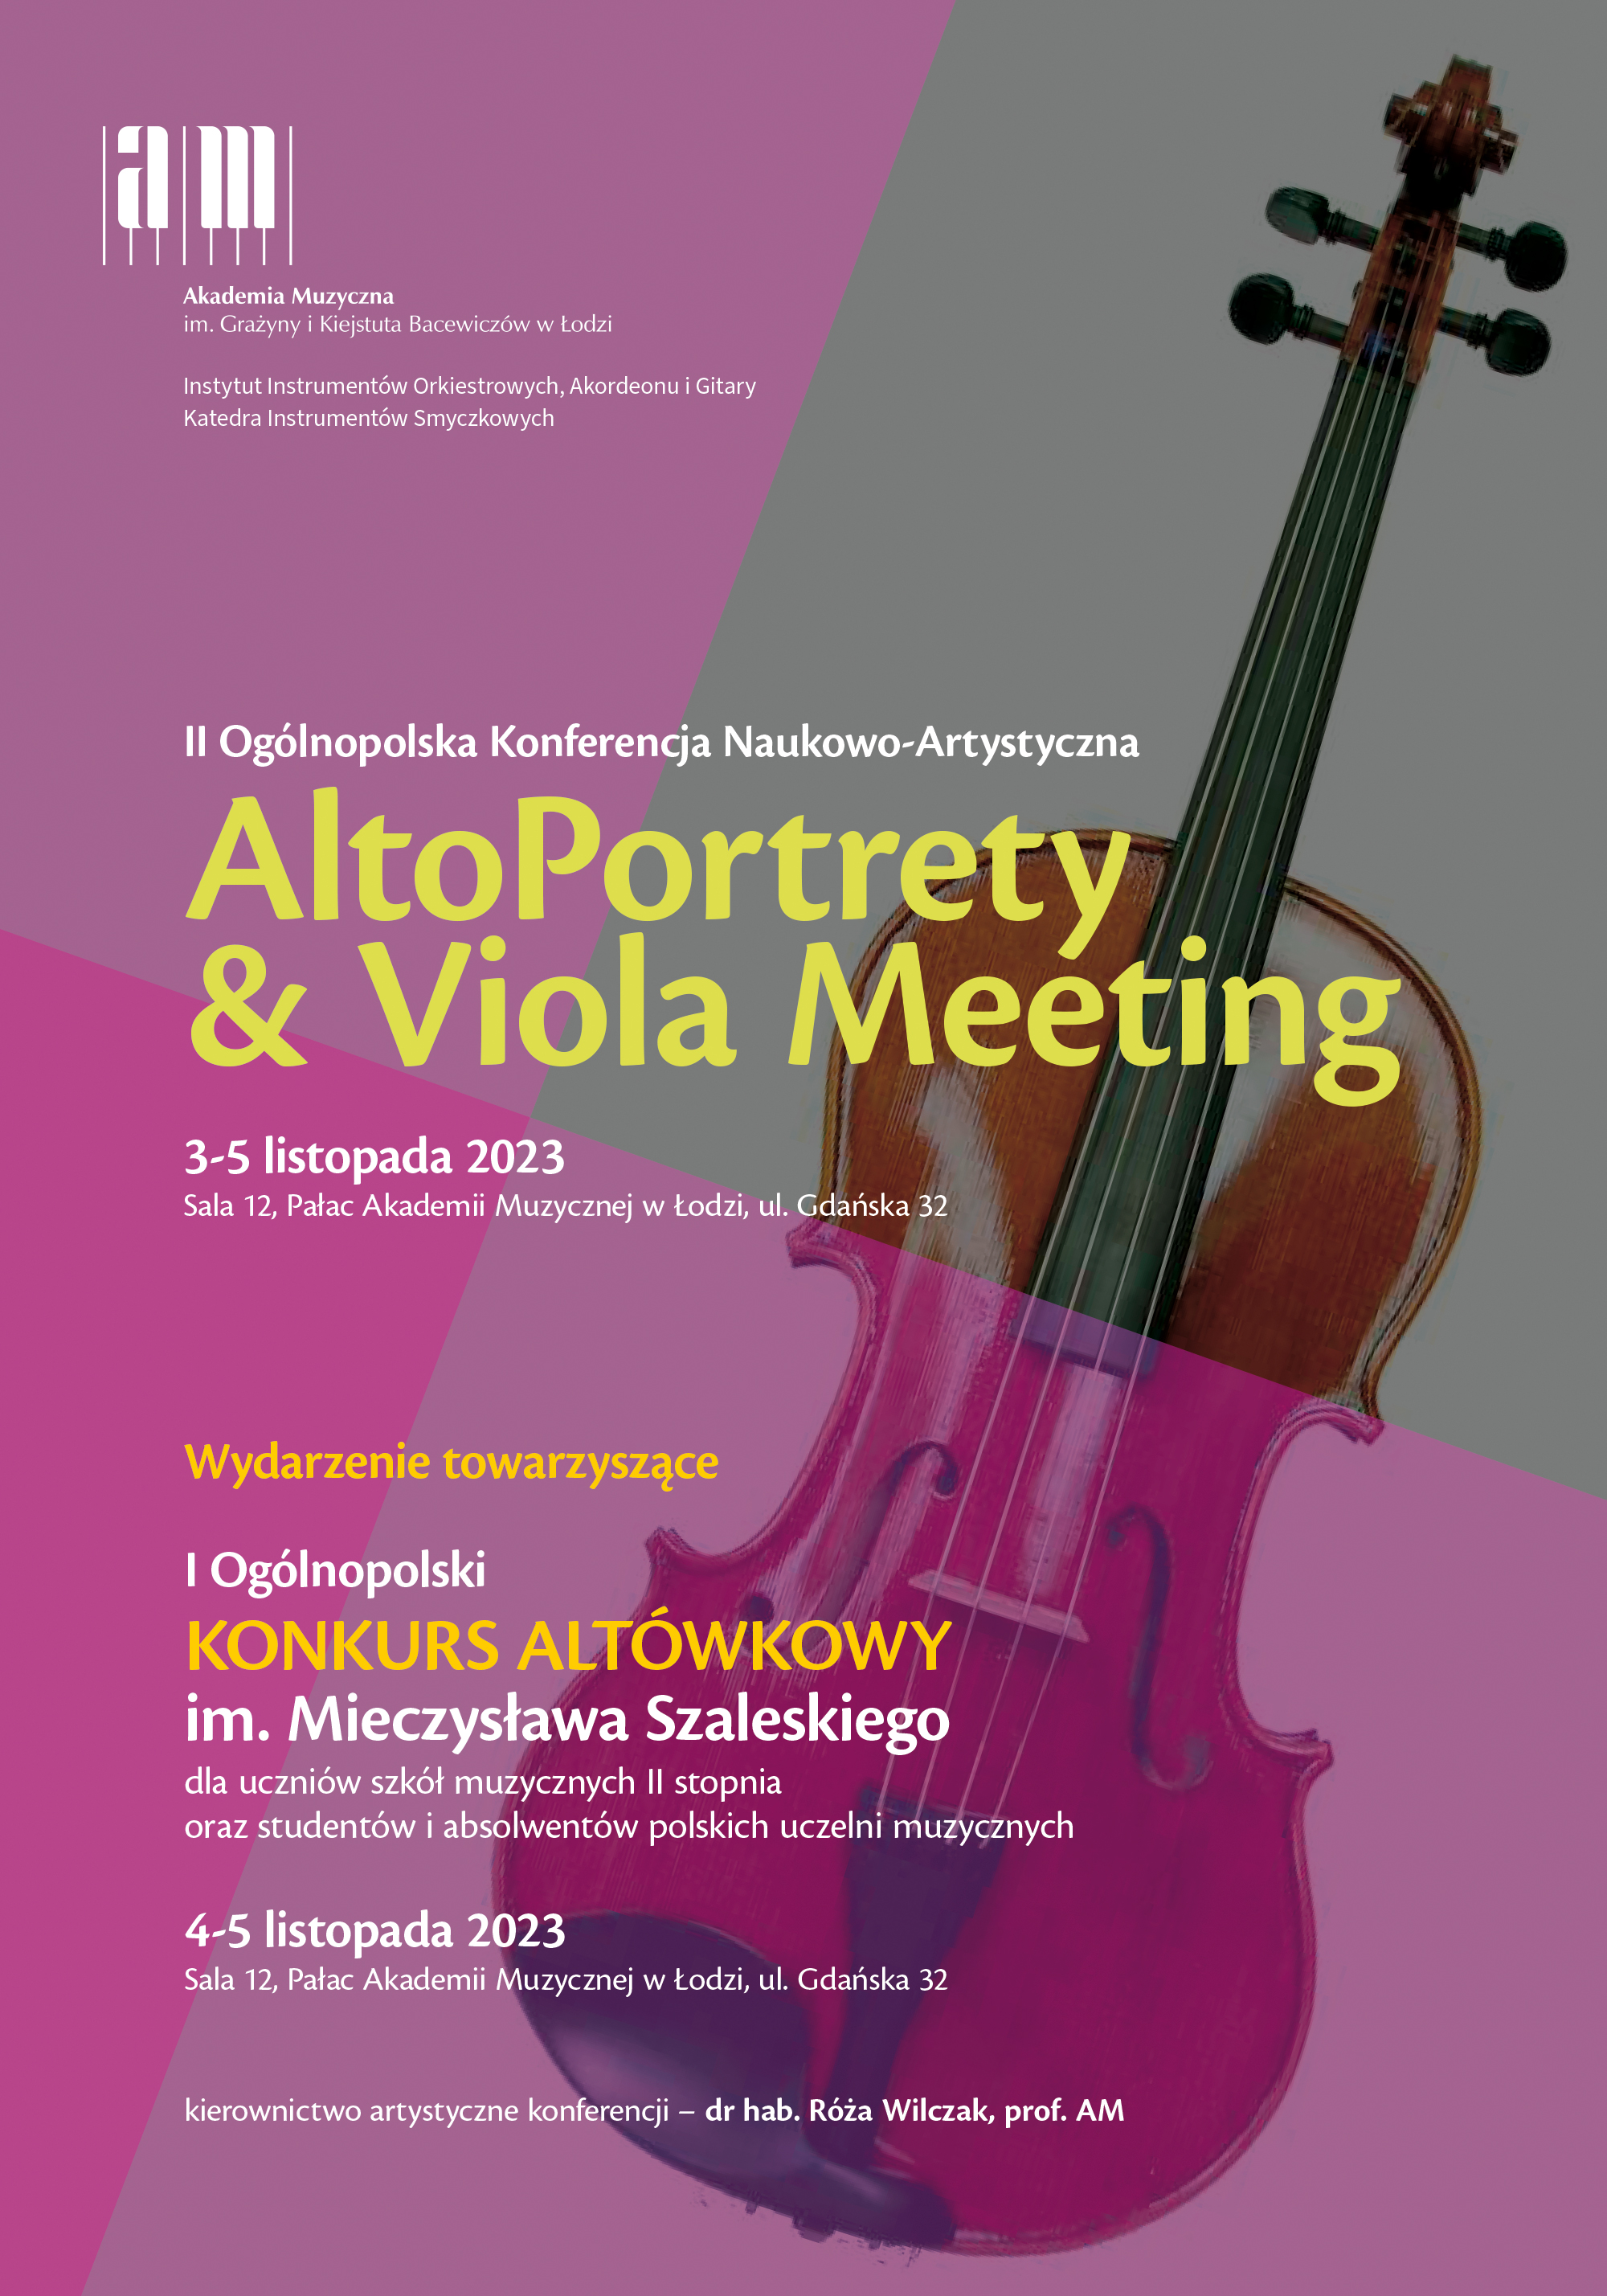 AltoPortrety & Viola Meeting